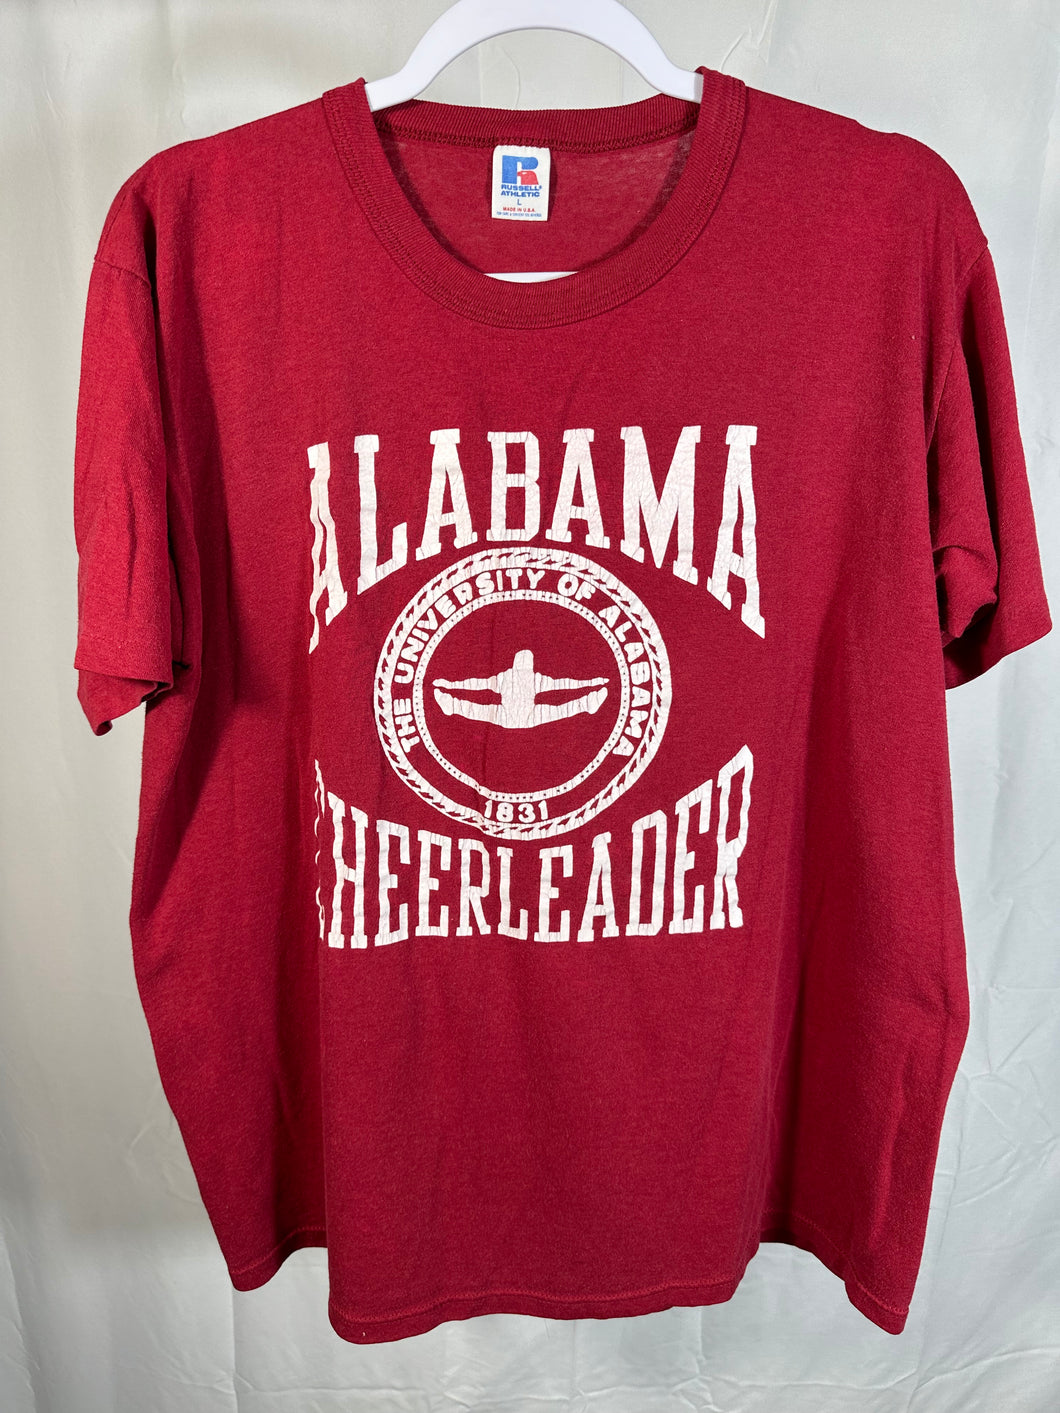 Vintage Alabama Cheerleader T-Shirt Large